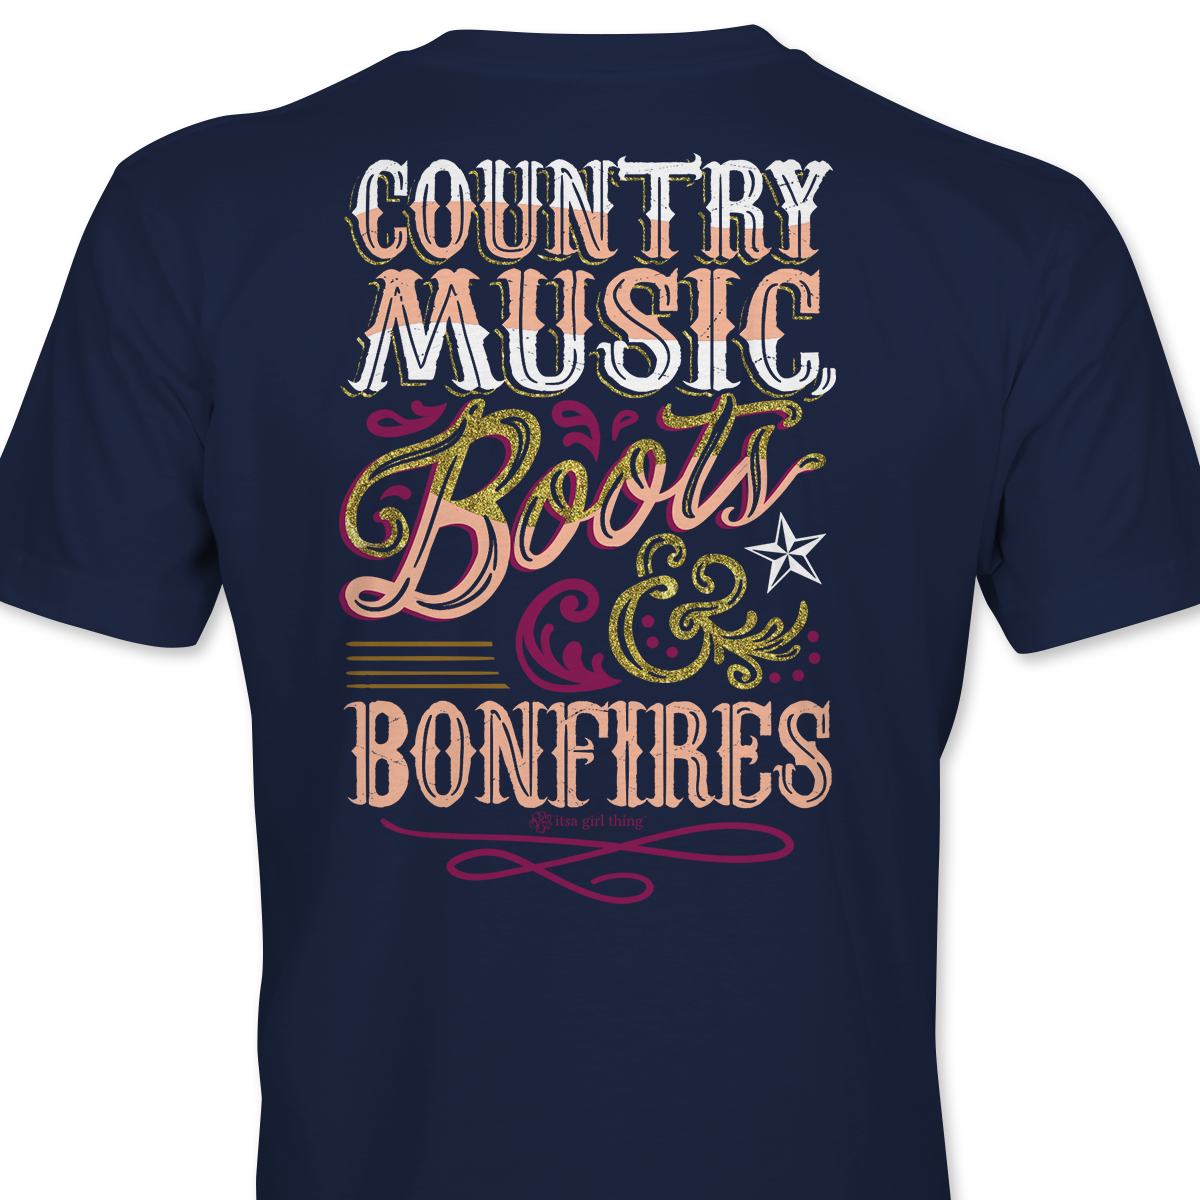 Music, Boots, Bonfires